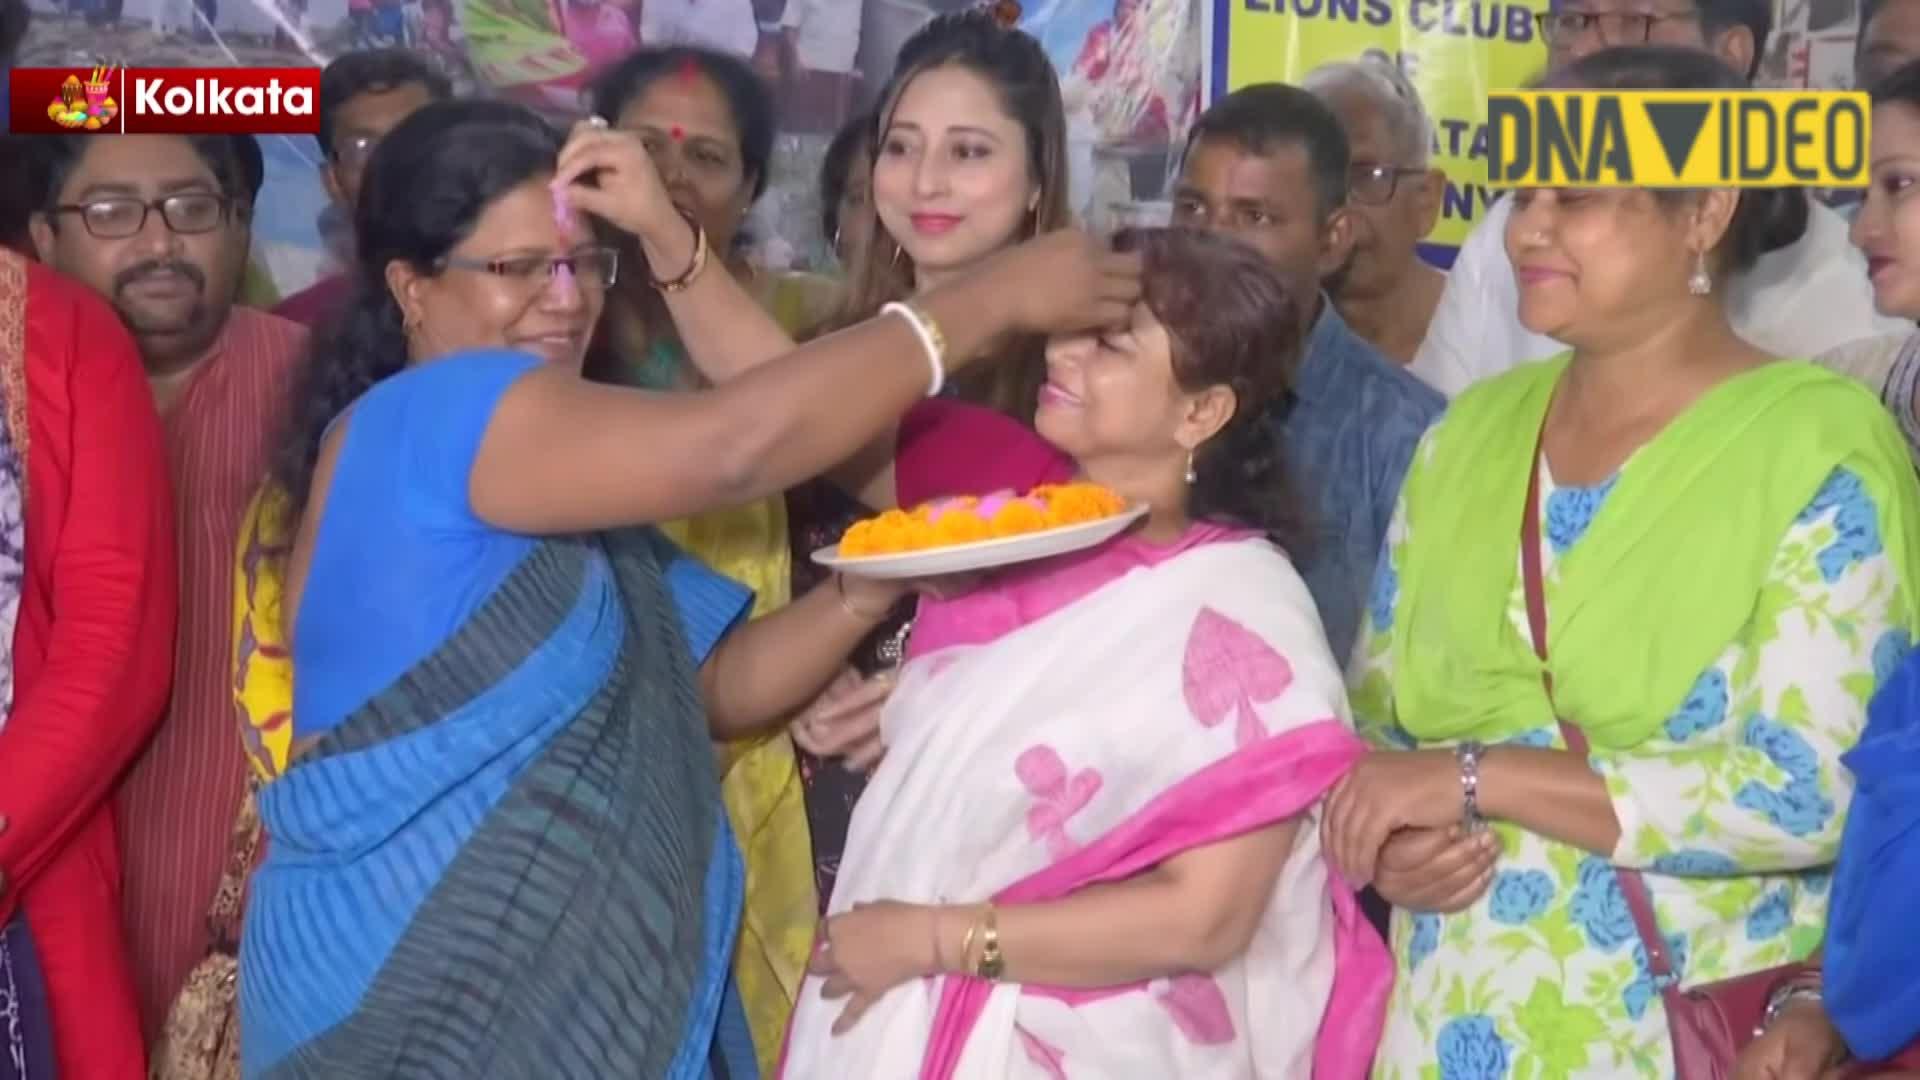 Kolkata Sonagachi Open Xxx Video - Sex workers in Kolkata's Sonagachi celebrate Holi after two years